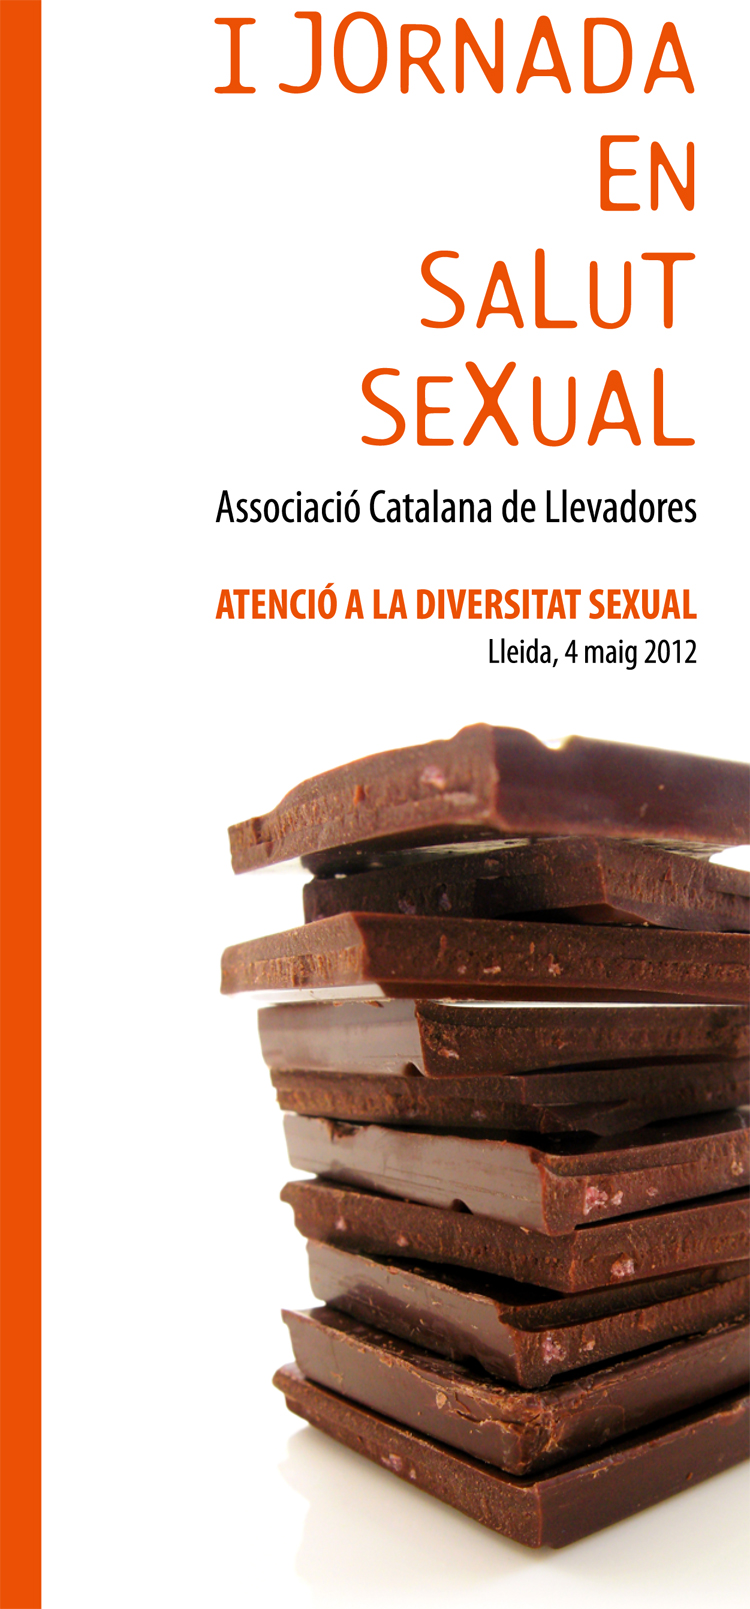 Programa - I jornada salut sexual Lleida